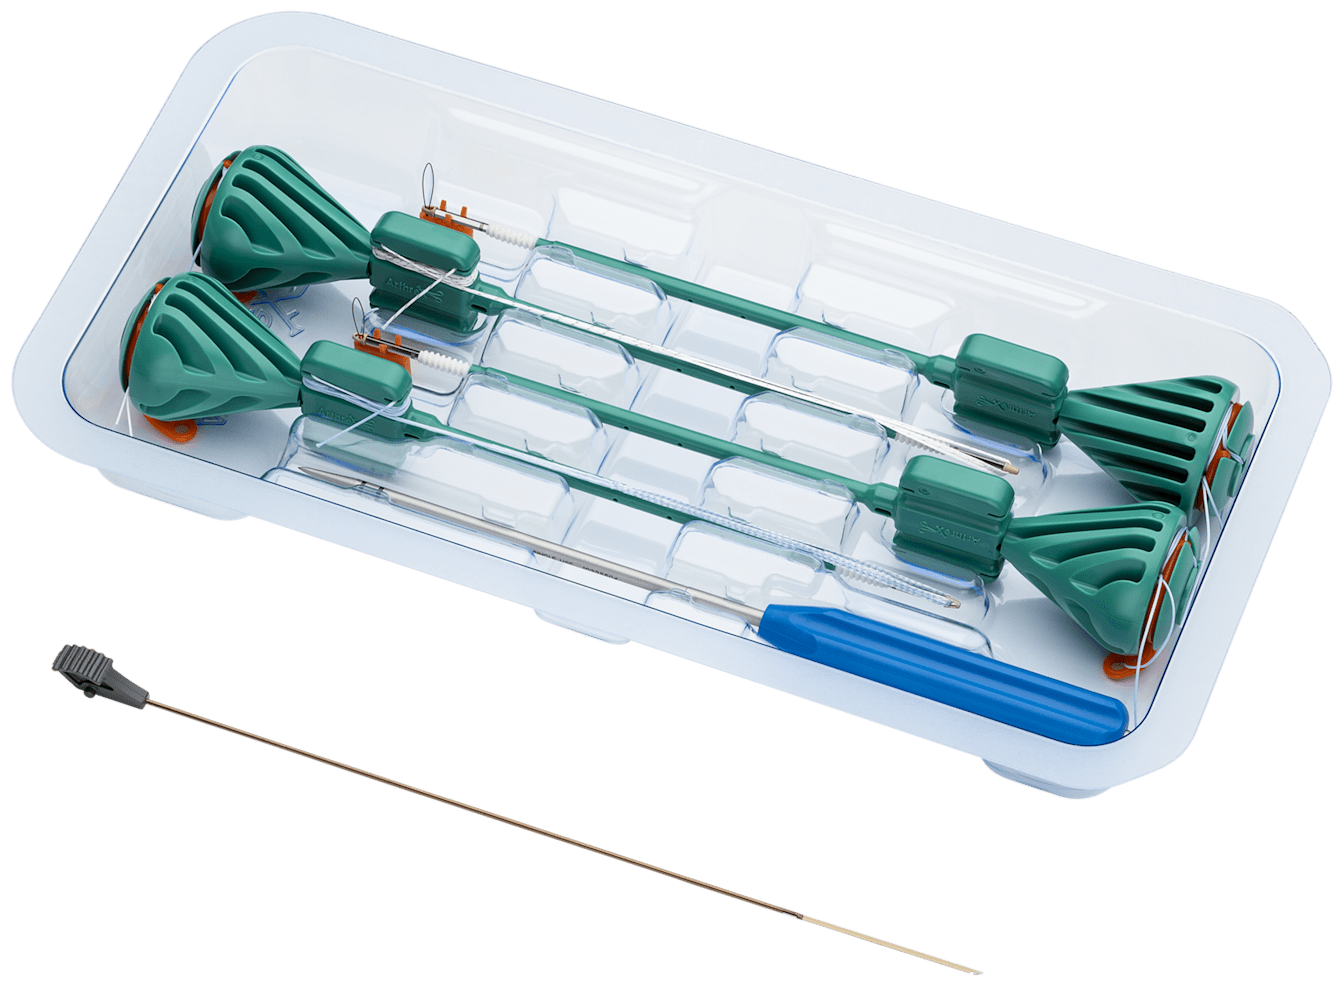 4.75 mm BioComposite SpeedBridge Implant System w/SCORPION-Multifire Needle Includes two 4.75 mm BioComposite SwiveLock C Anchors w/one Preloaded FiberTape Loop (1 Blue, 1 White/Black) for Medial Row, two 4.75 BioComposite SwiveLock Anchors for Lateral Row, Disposable Punch, and SCORPION-Multifire Needle